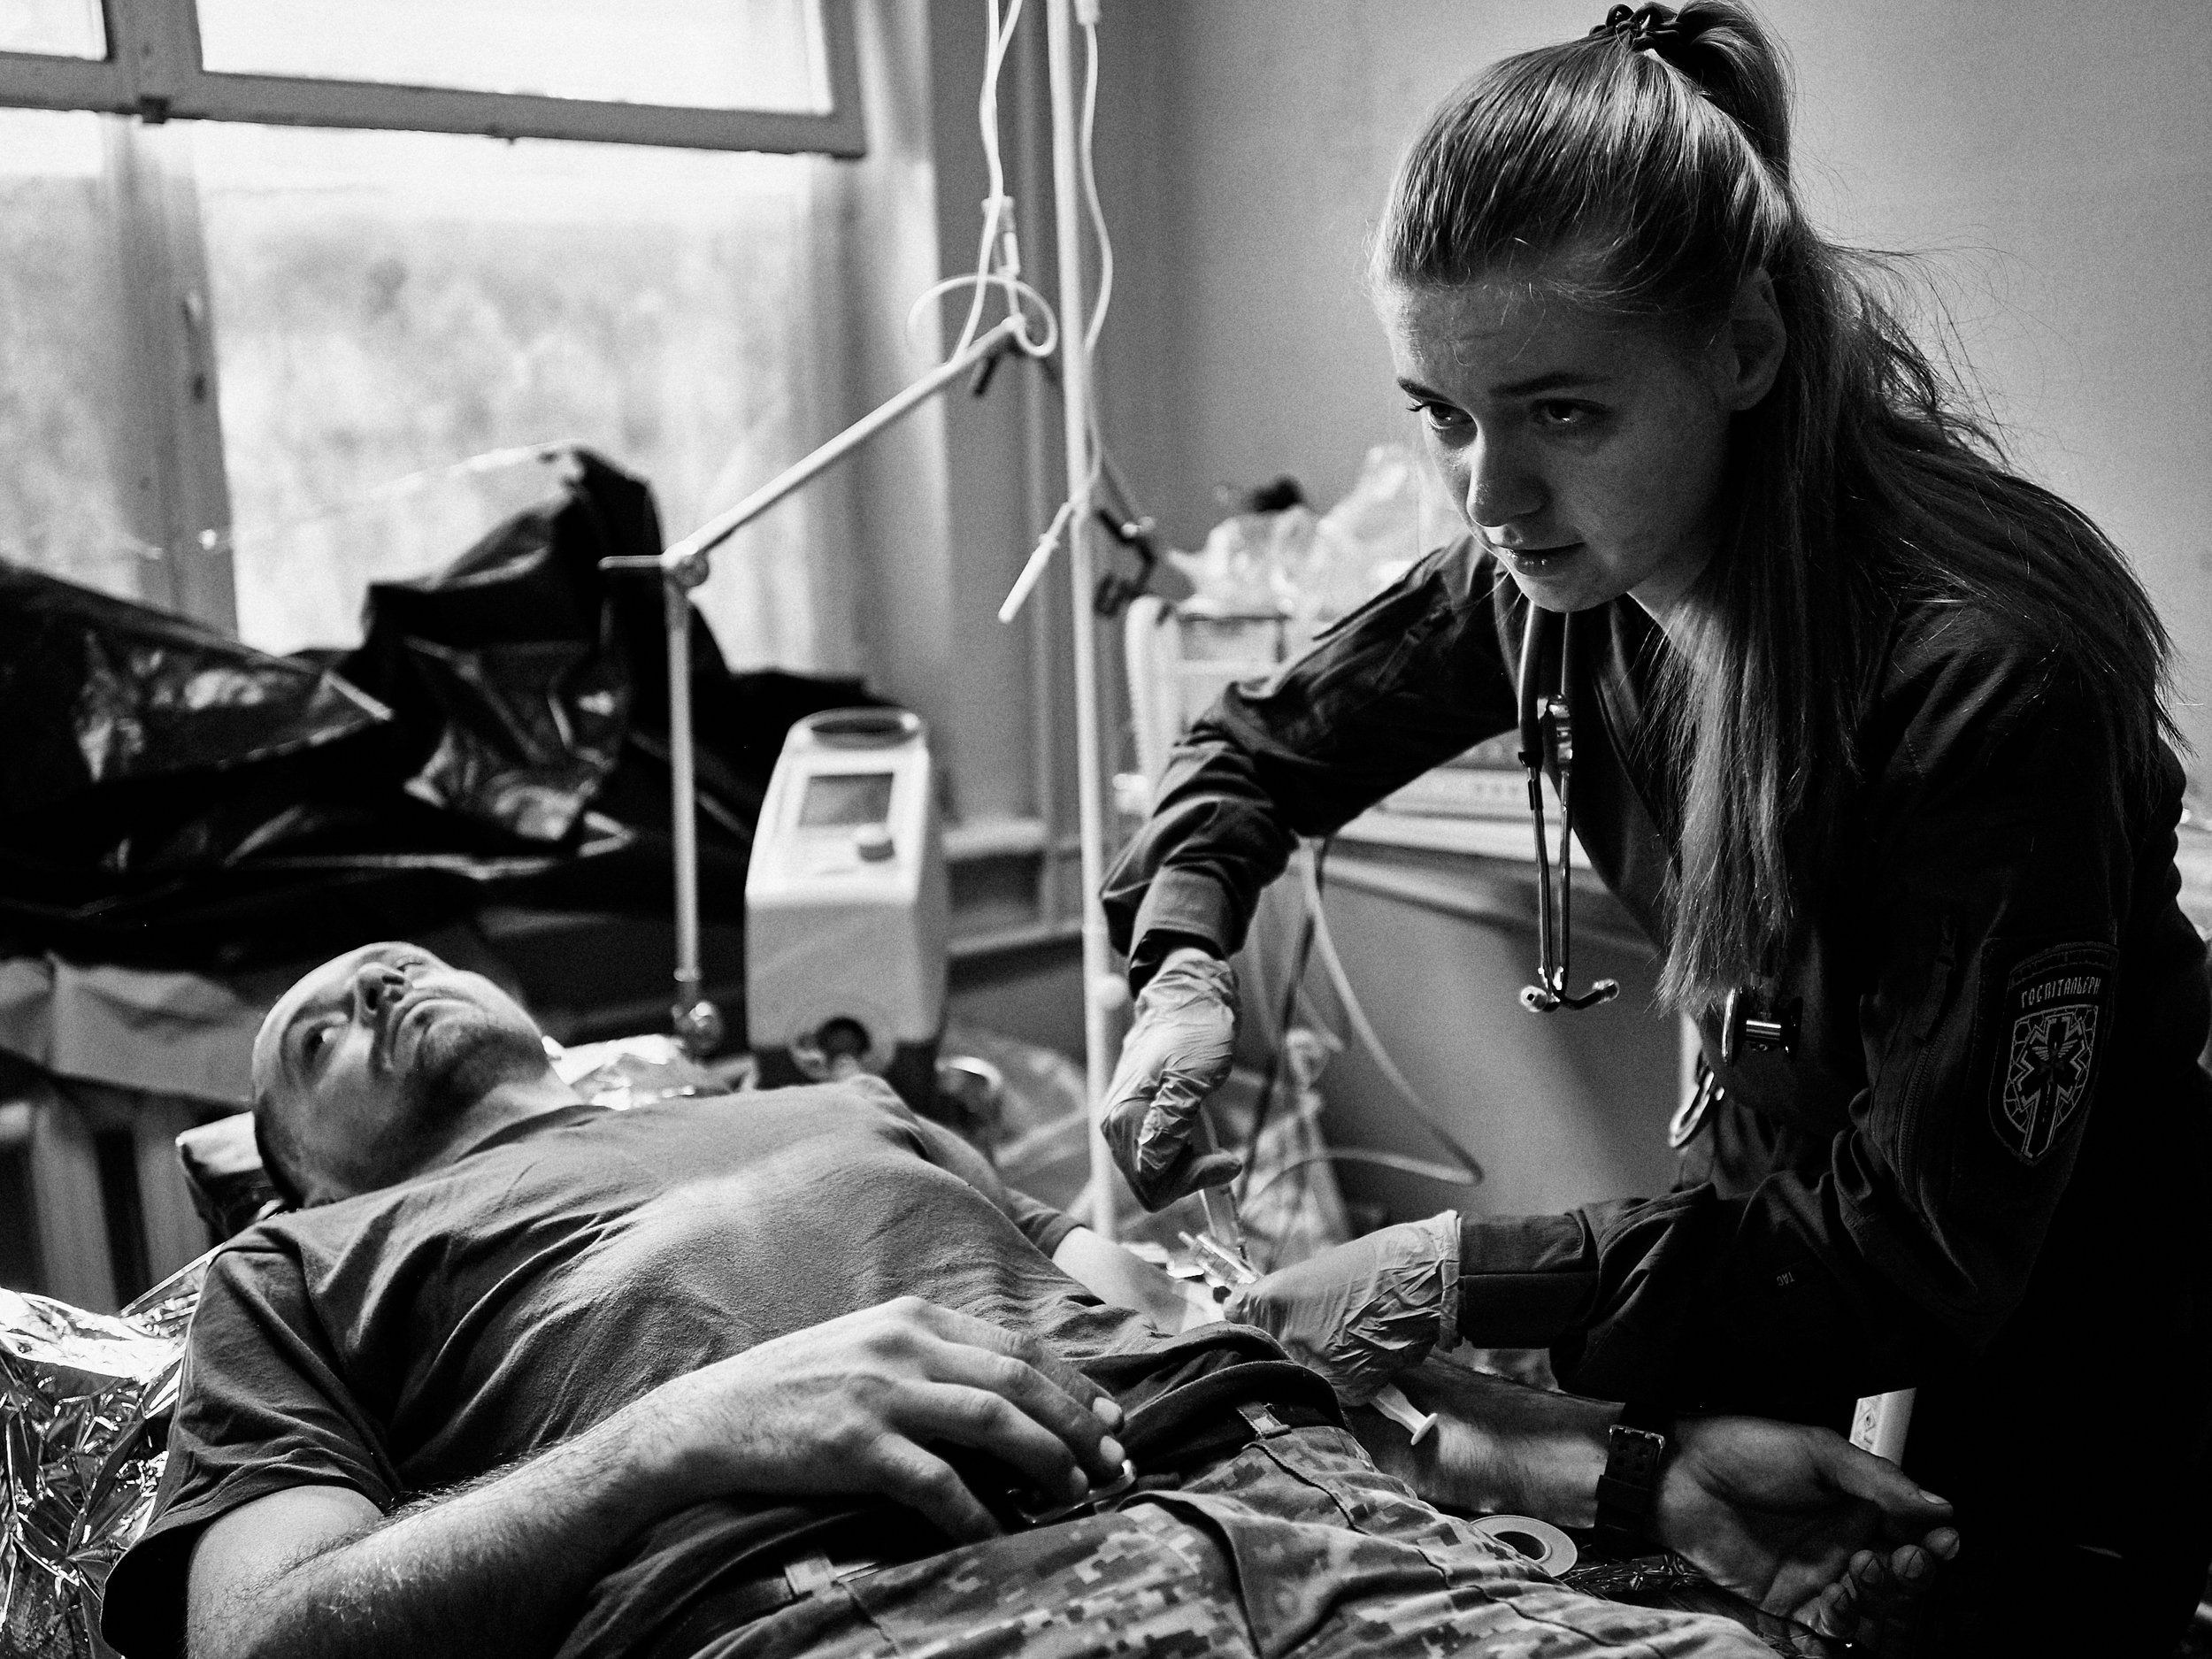 A medic treats a shellshocked soldier with morphine, Zaporizhzhia Oblast